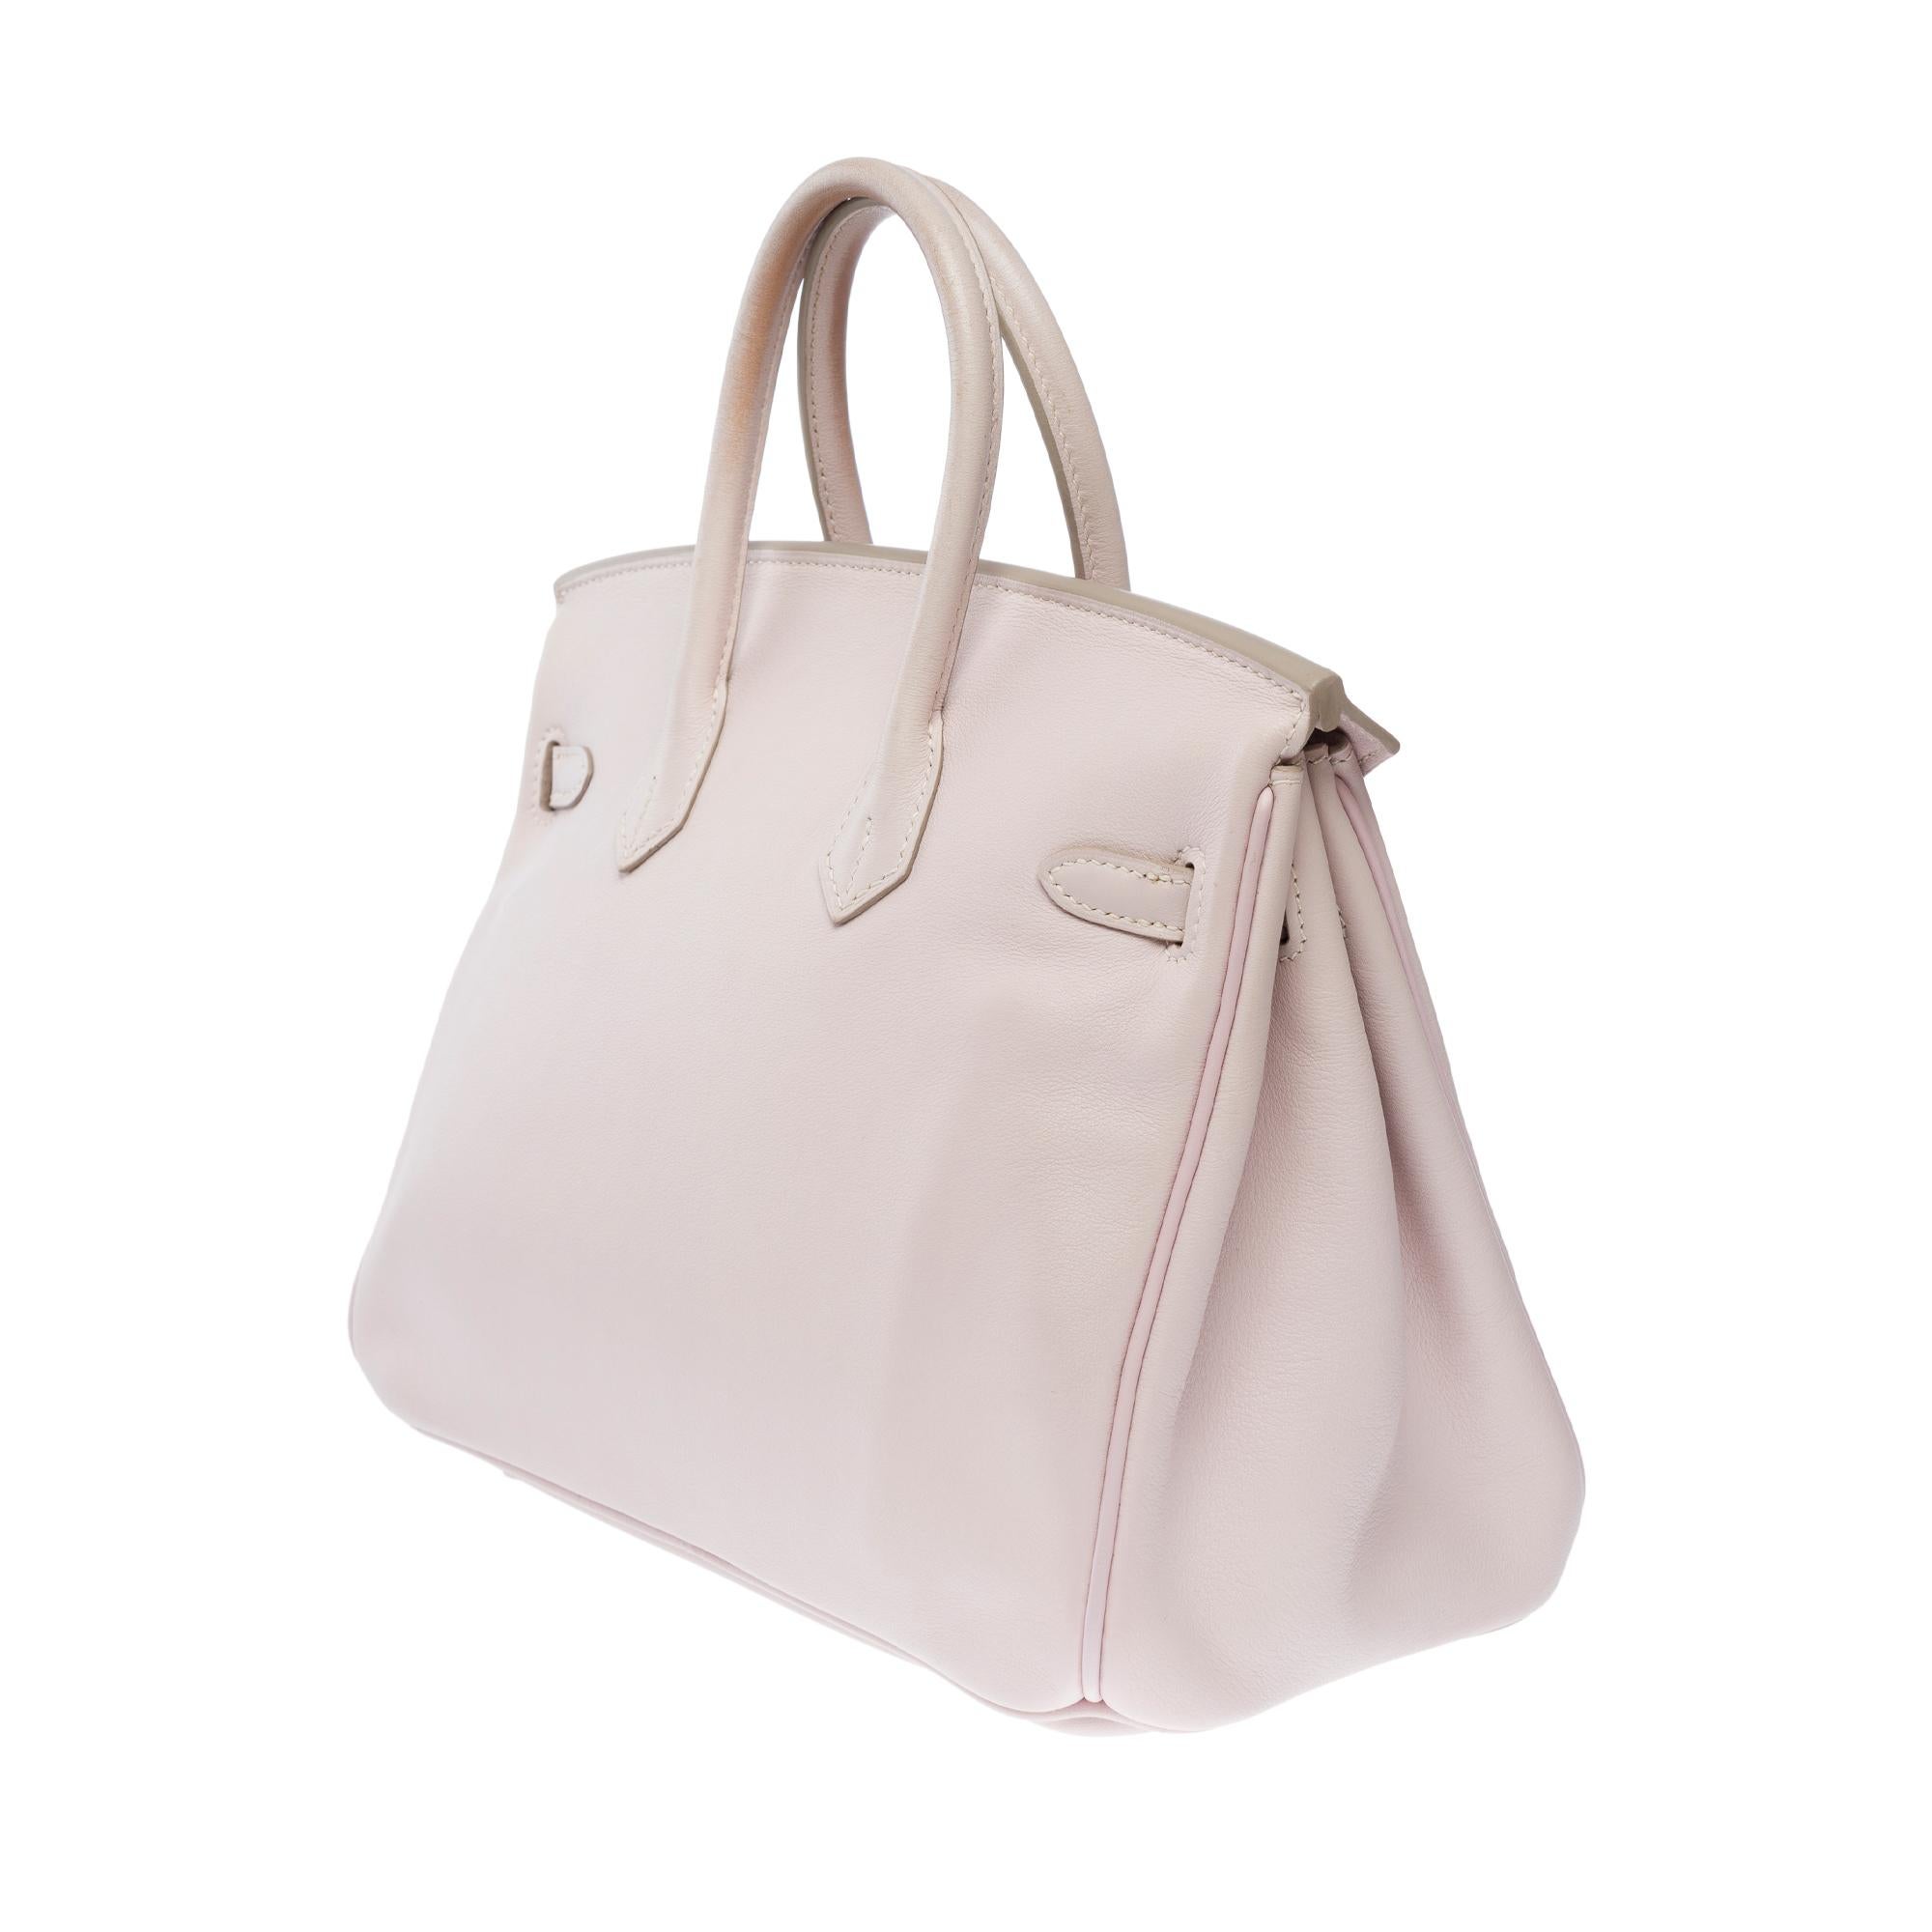 Amazing Hermes Birkin 25cm handbag in Rose Dragee Swift Calf leather, SHW For Sale 2